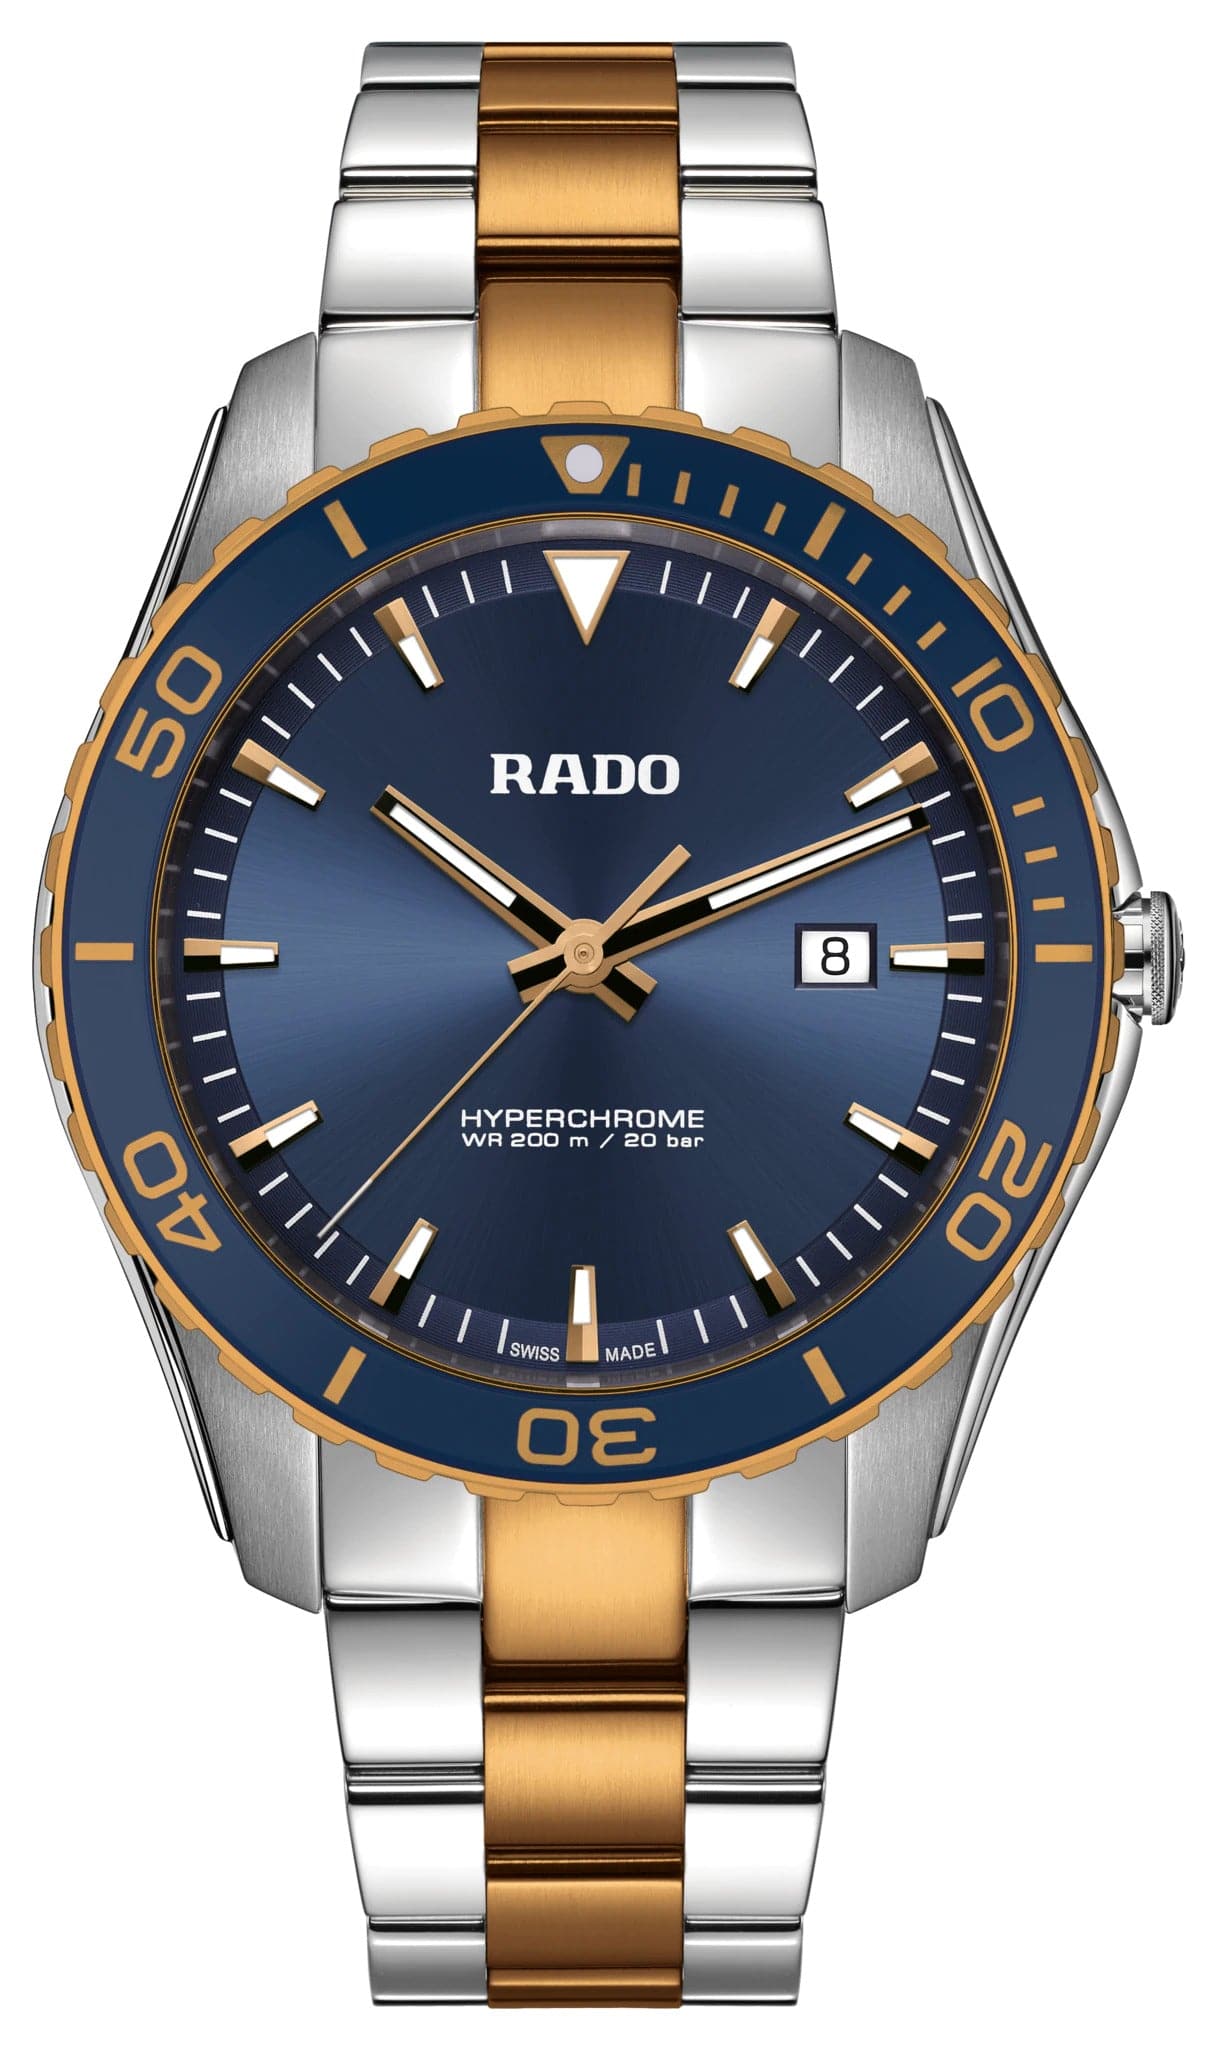 RADO HyperChrome - Kamal Watch Company